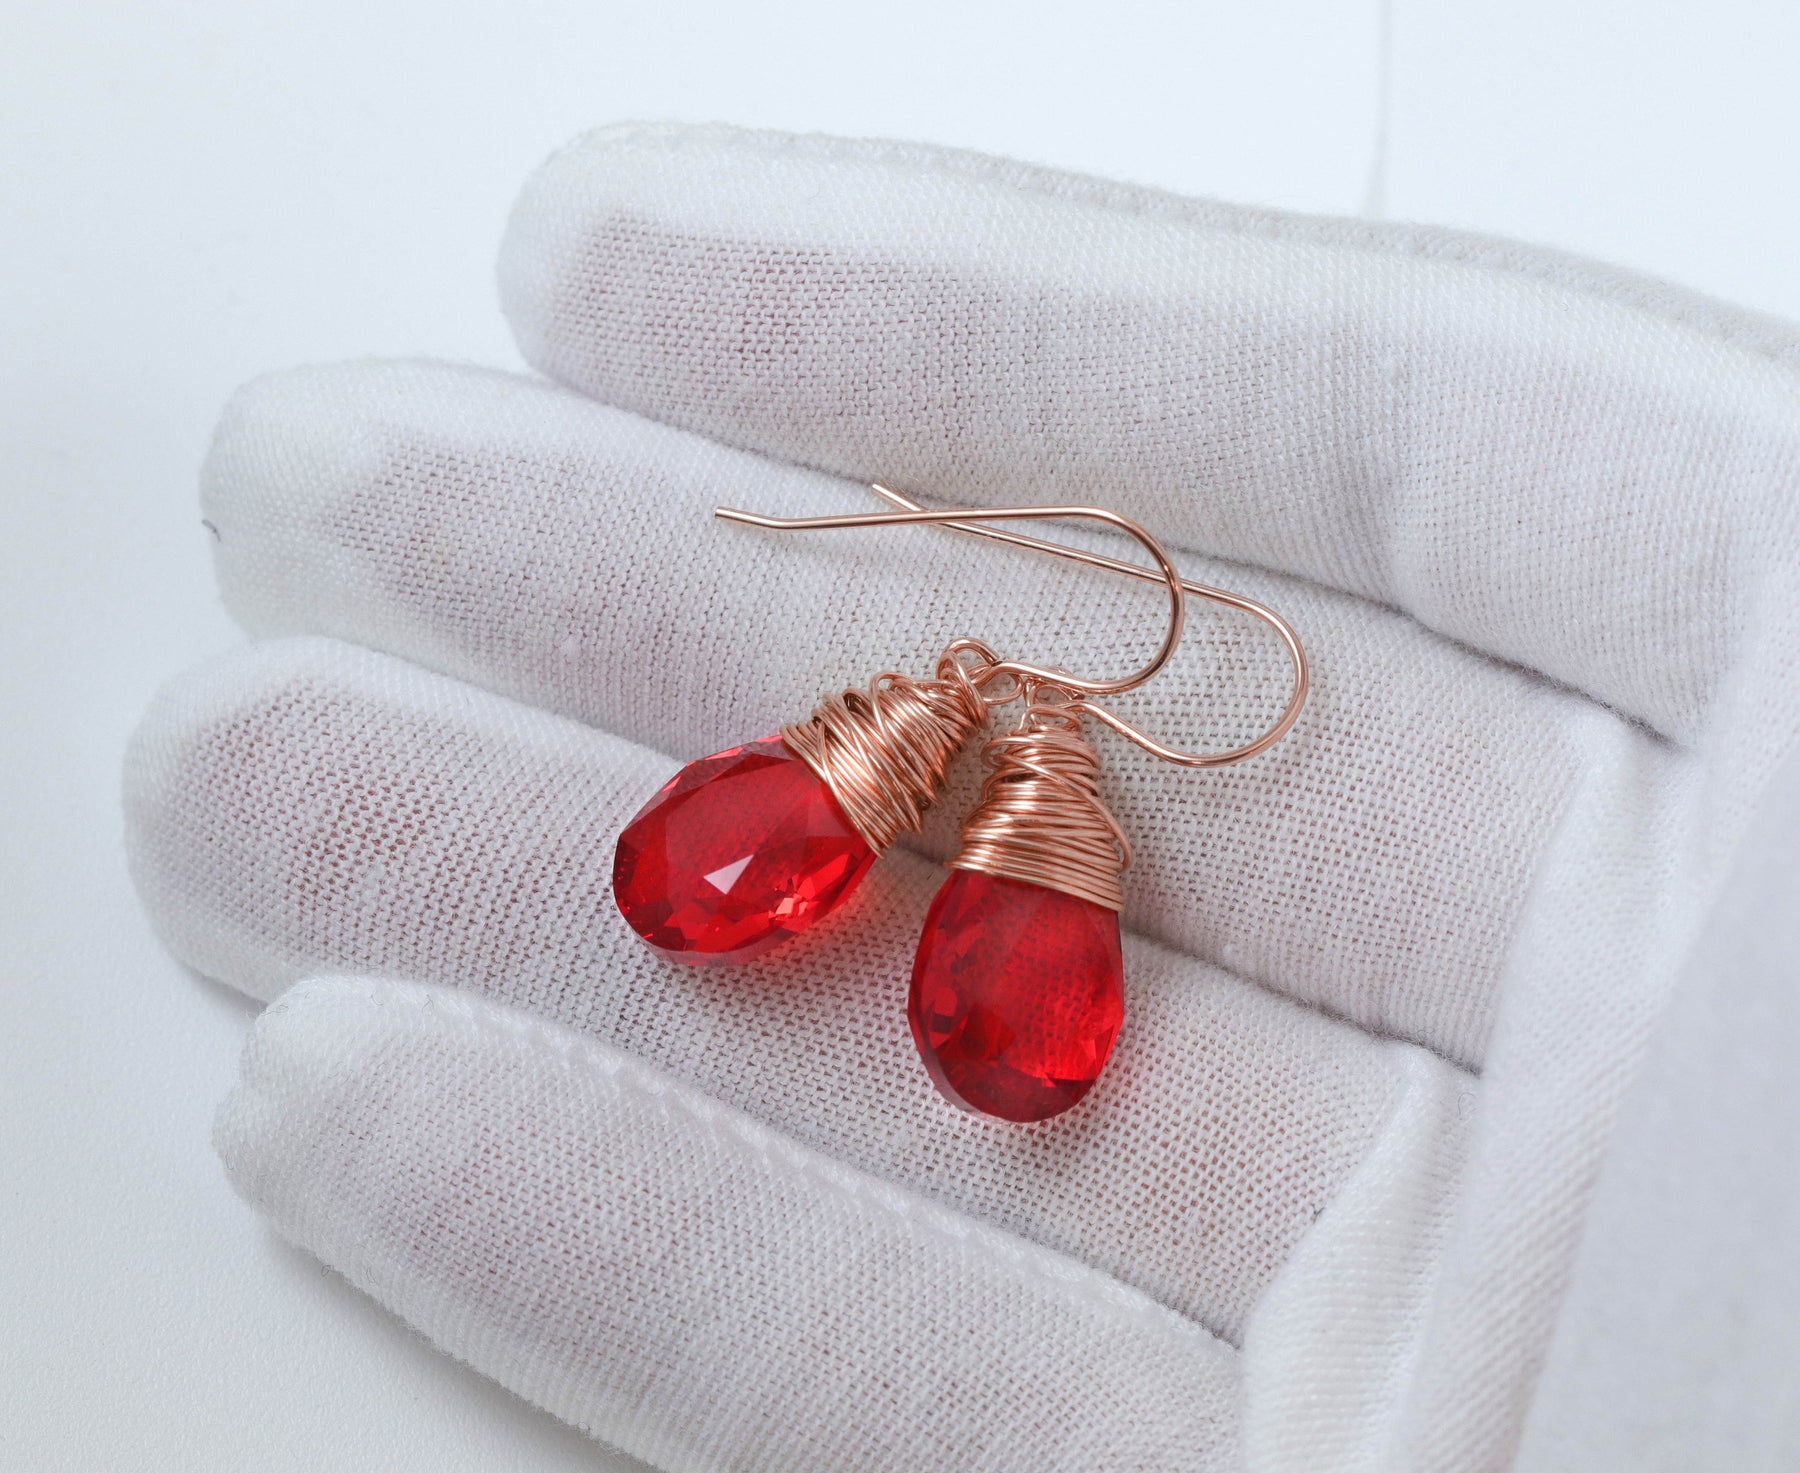 Charming Hearts 2 Earrings, DIY Wire Wrap Earring Tutorial, Pattern – My  Wired Imagination